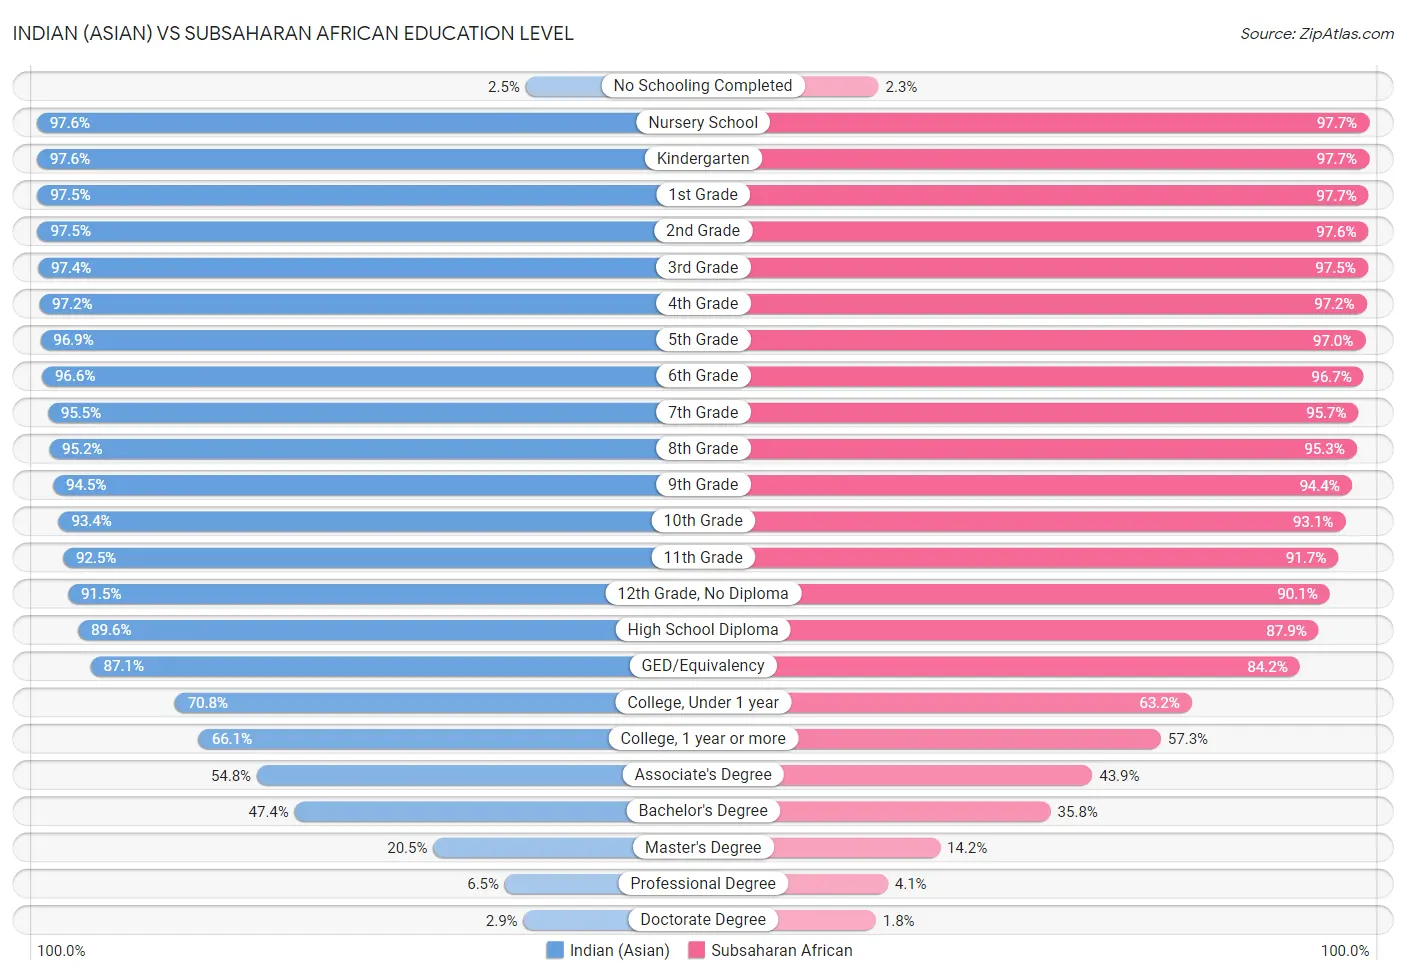 Indian (Asian) vs Subsaharan African Education Level